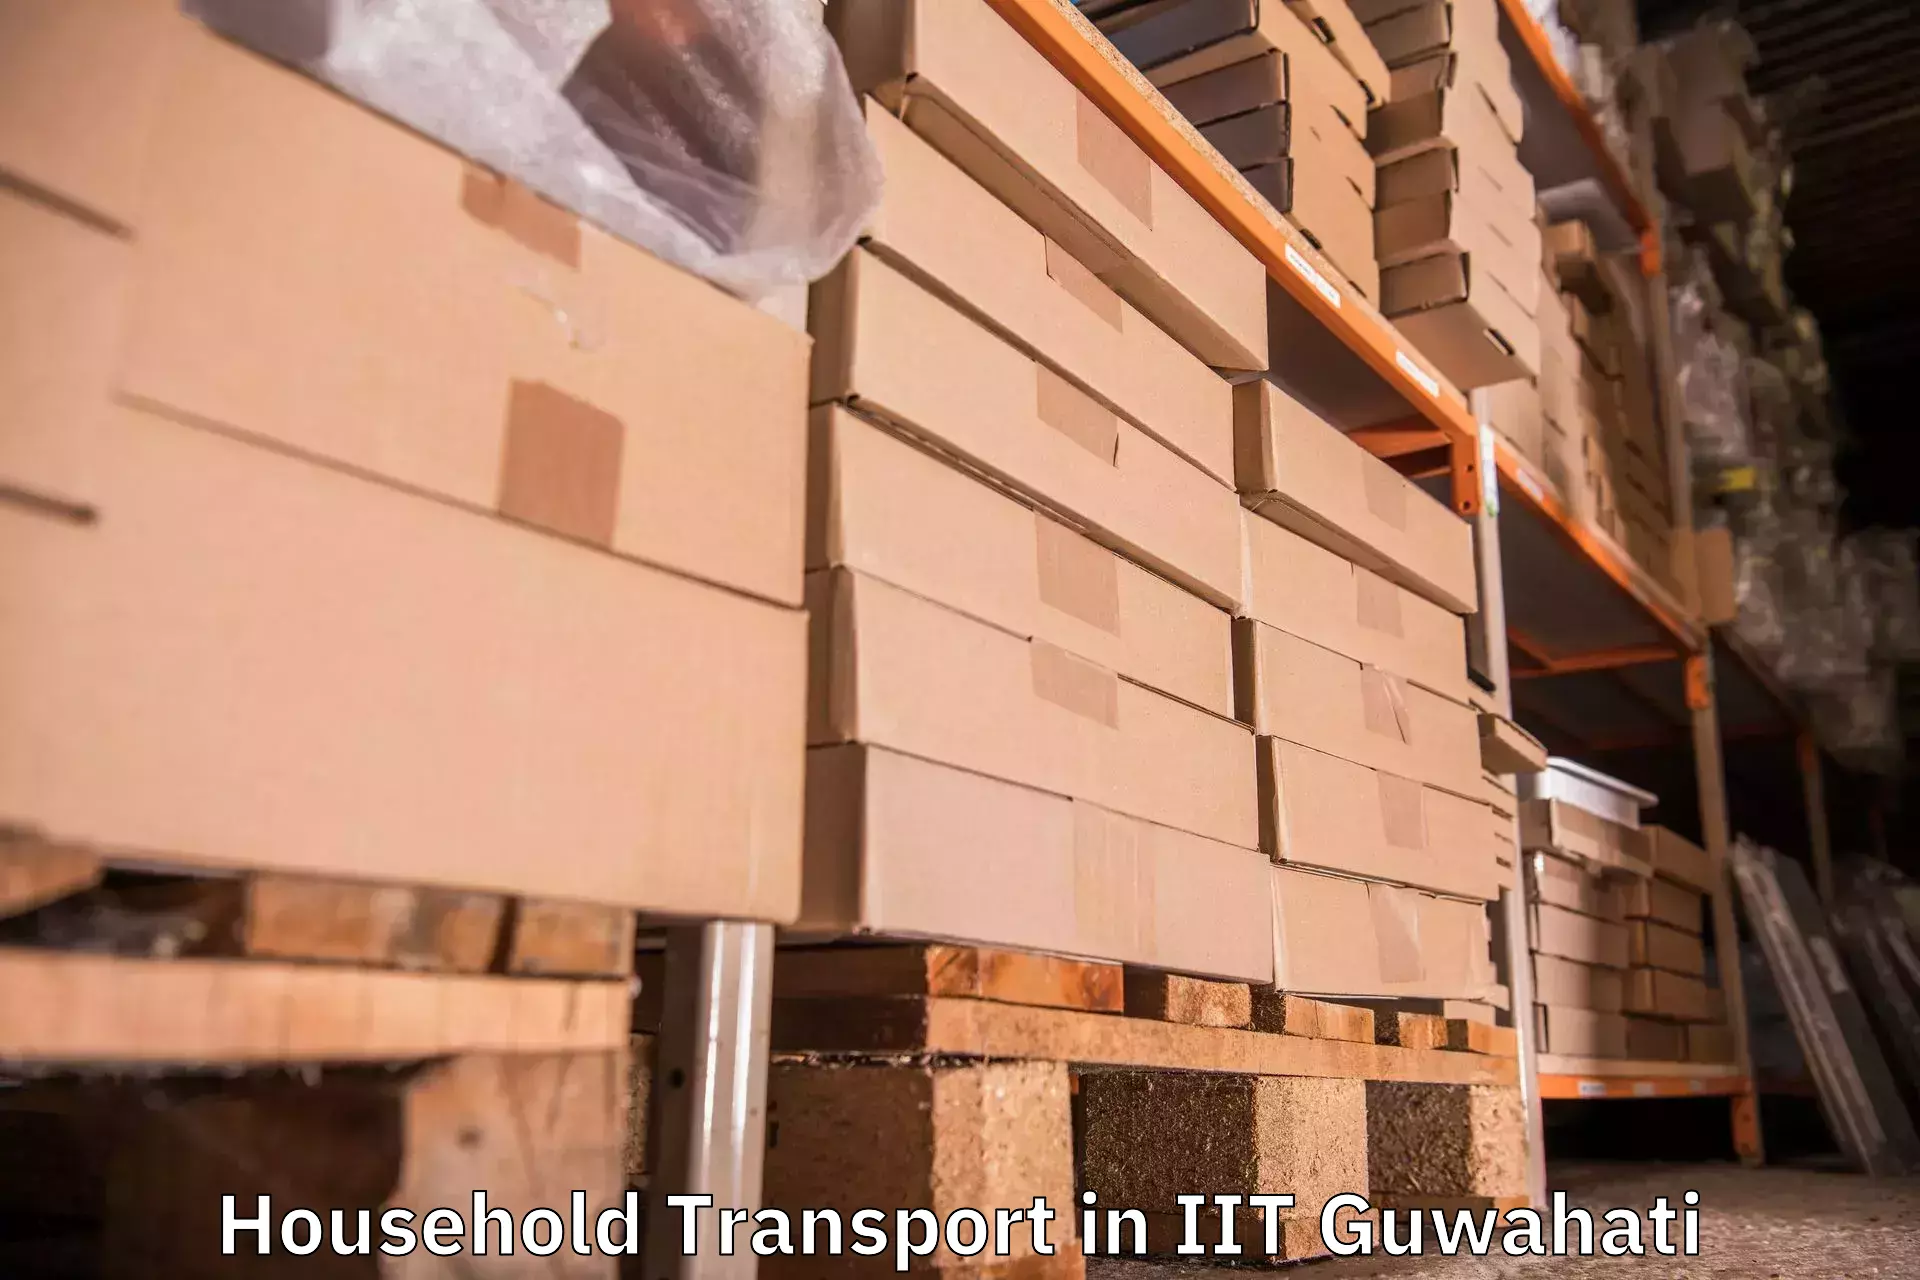 Furniture moving assistance in IIT Guwahati